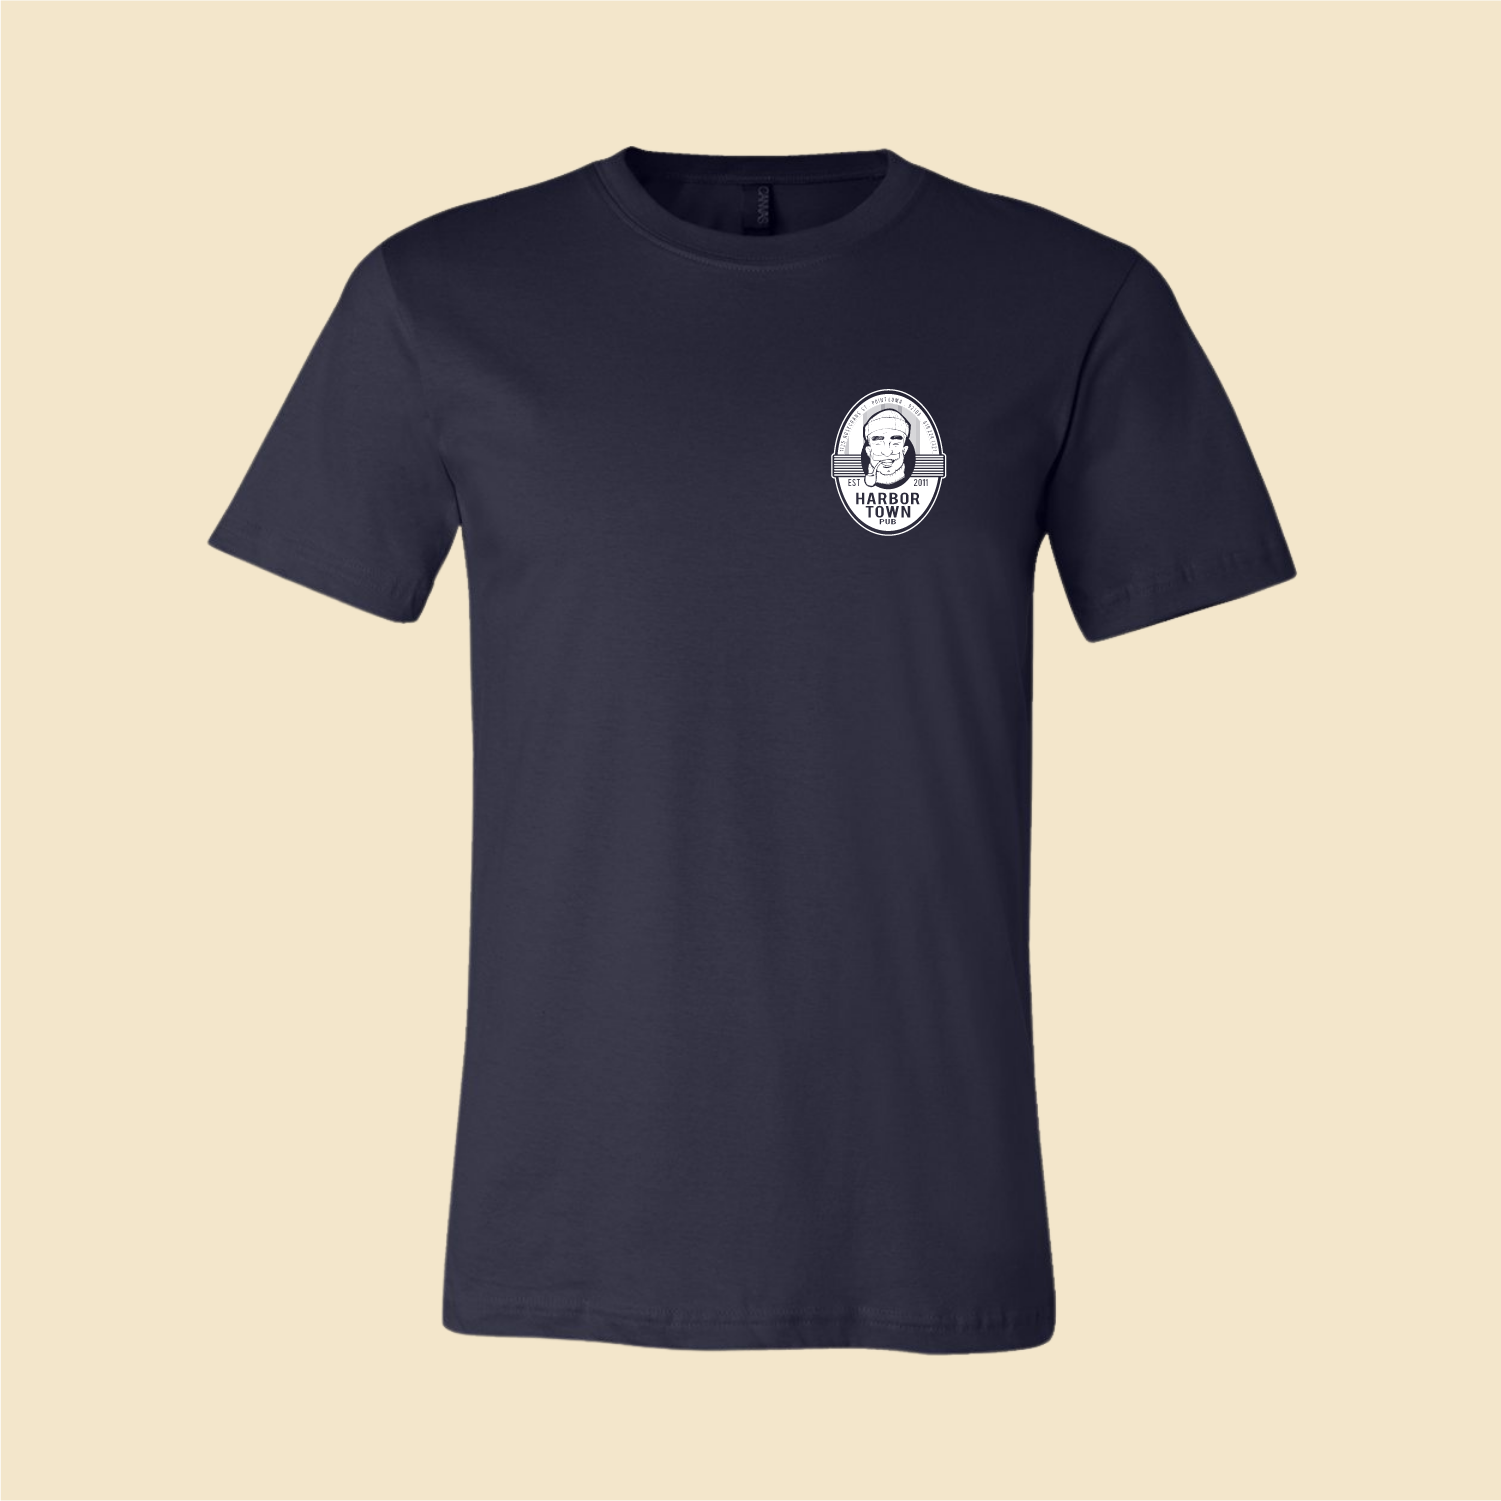 Unisex 100% Cotton Harbor Town T-Shirt Navy